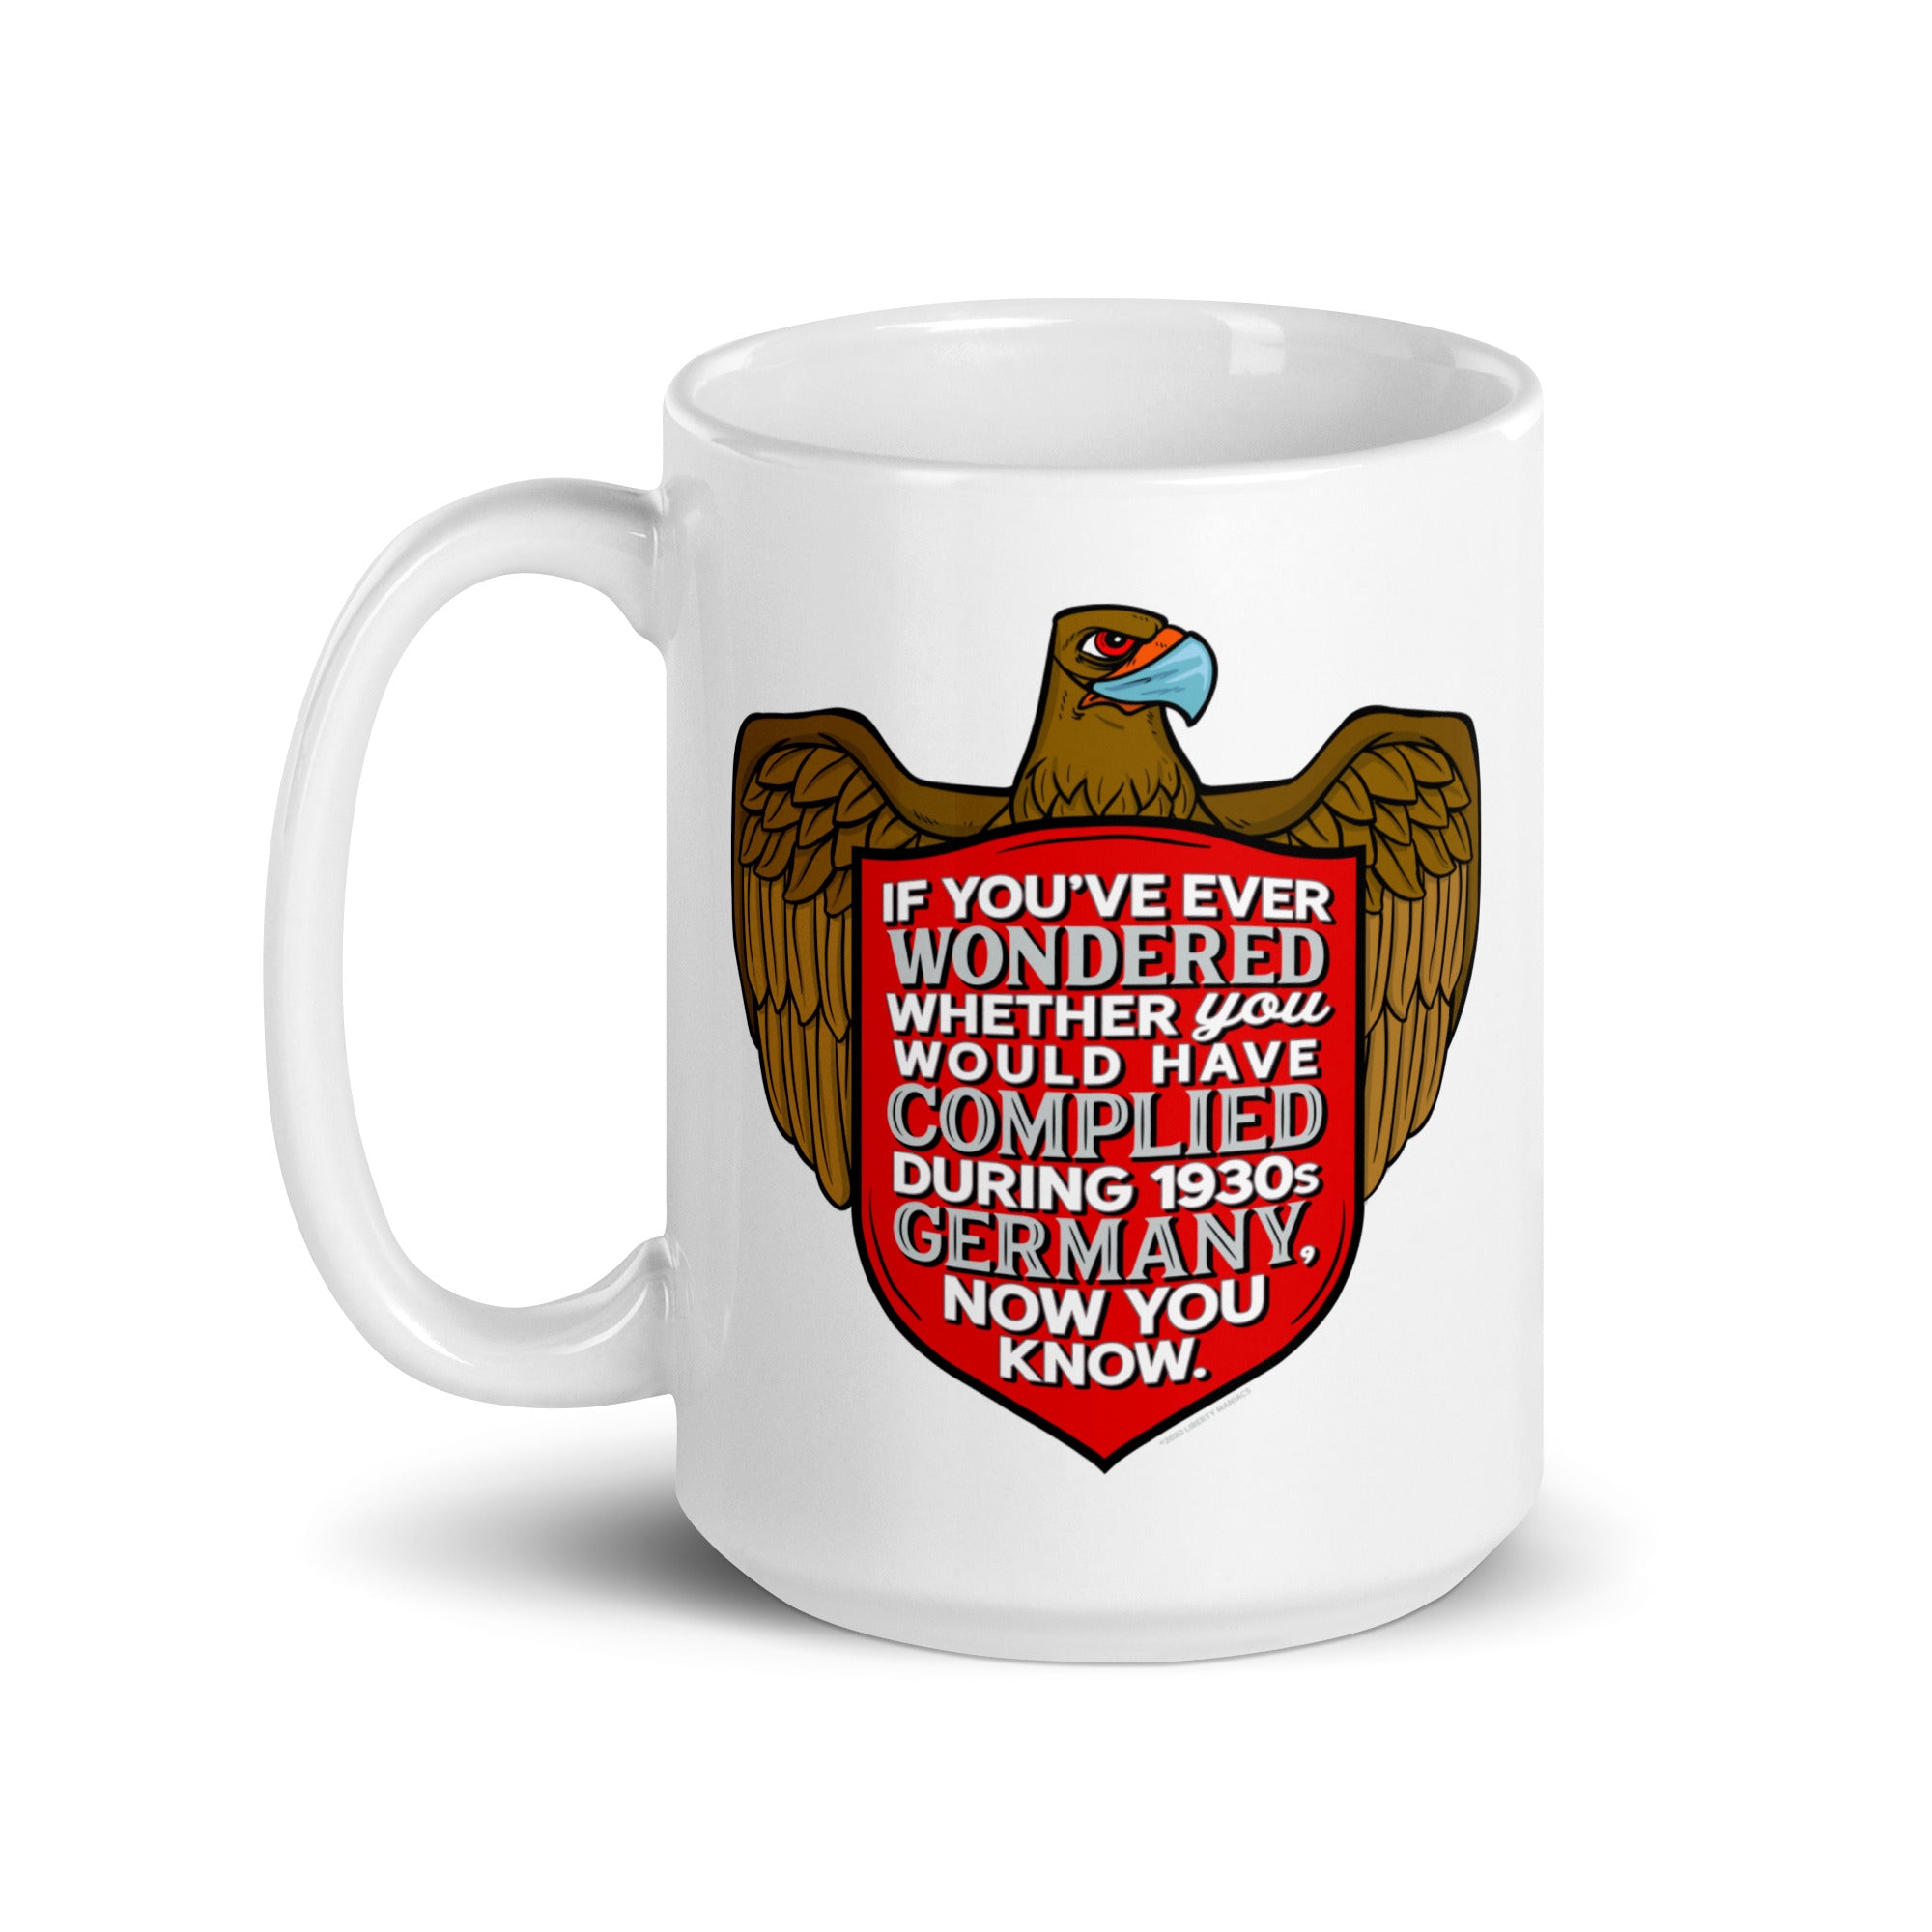 Now You Know Coffee Mug